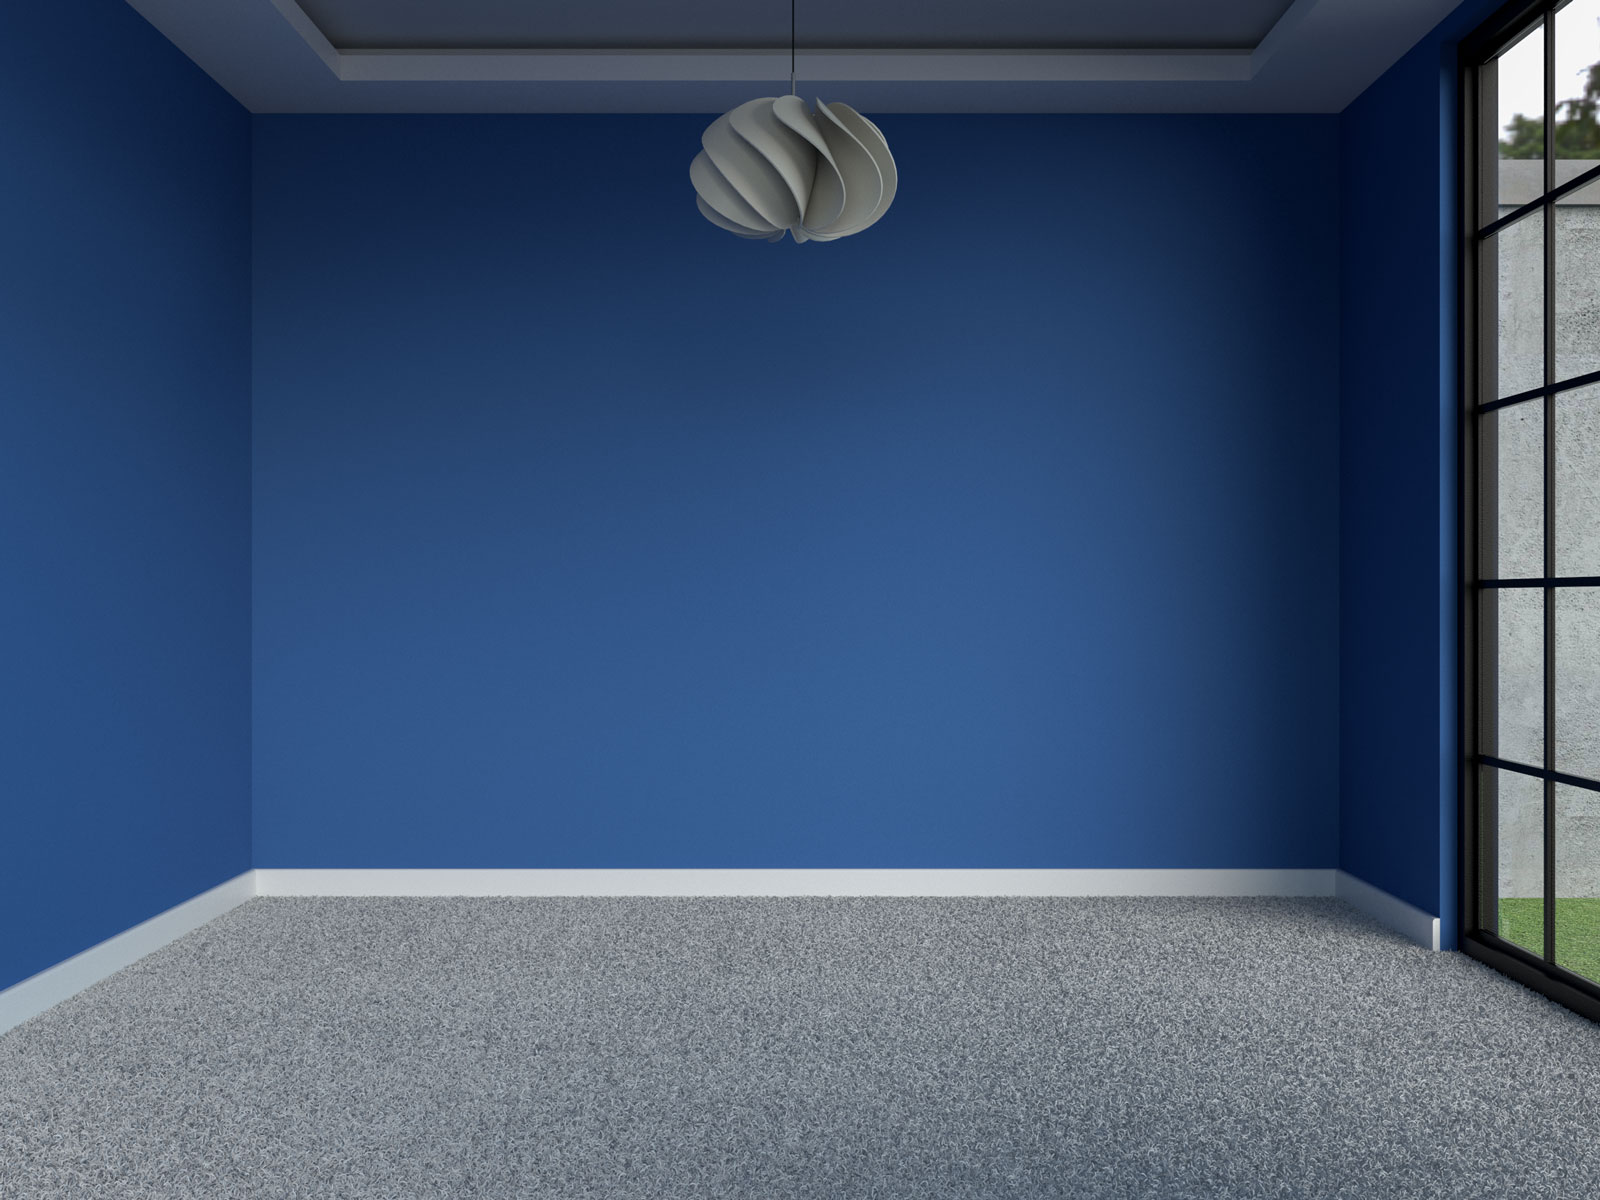 Cobalt blue walls with gray floors